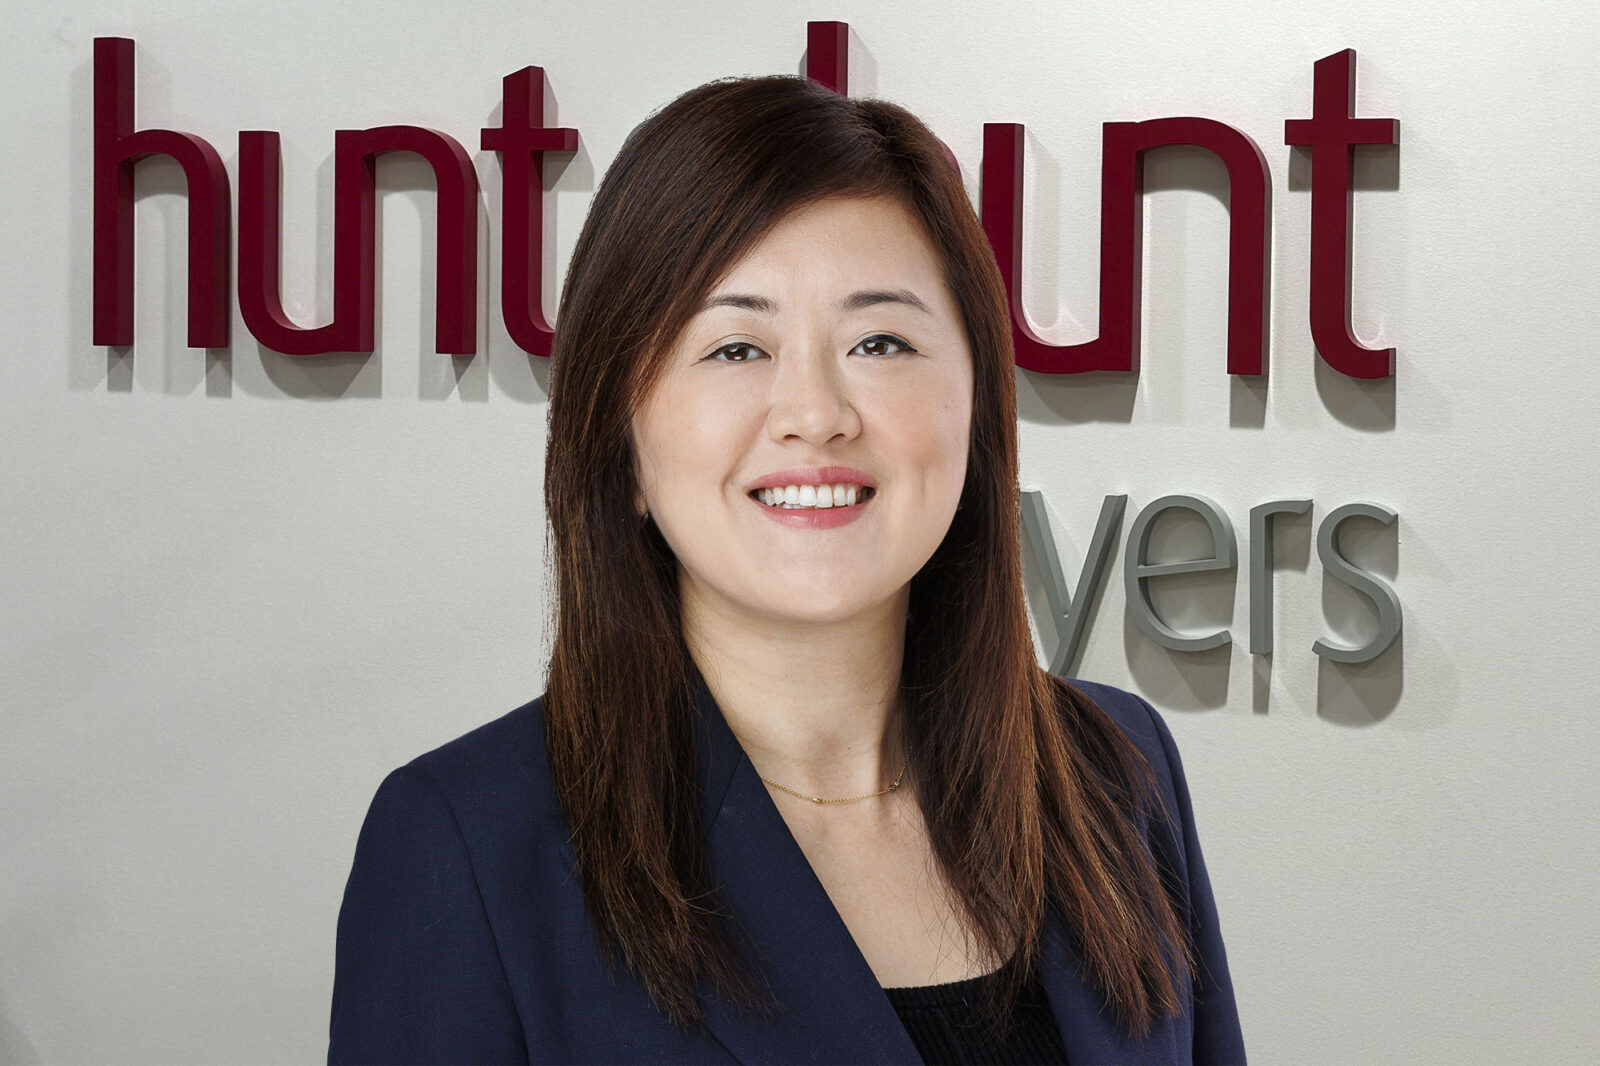 Marilyn Wai Business Lawyer and Asia & China Advisory